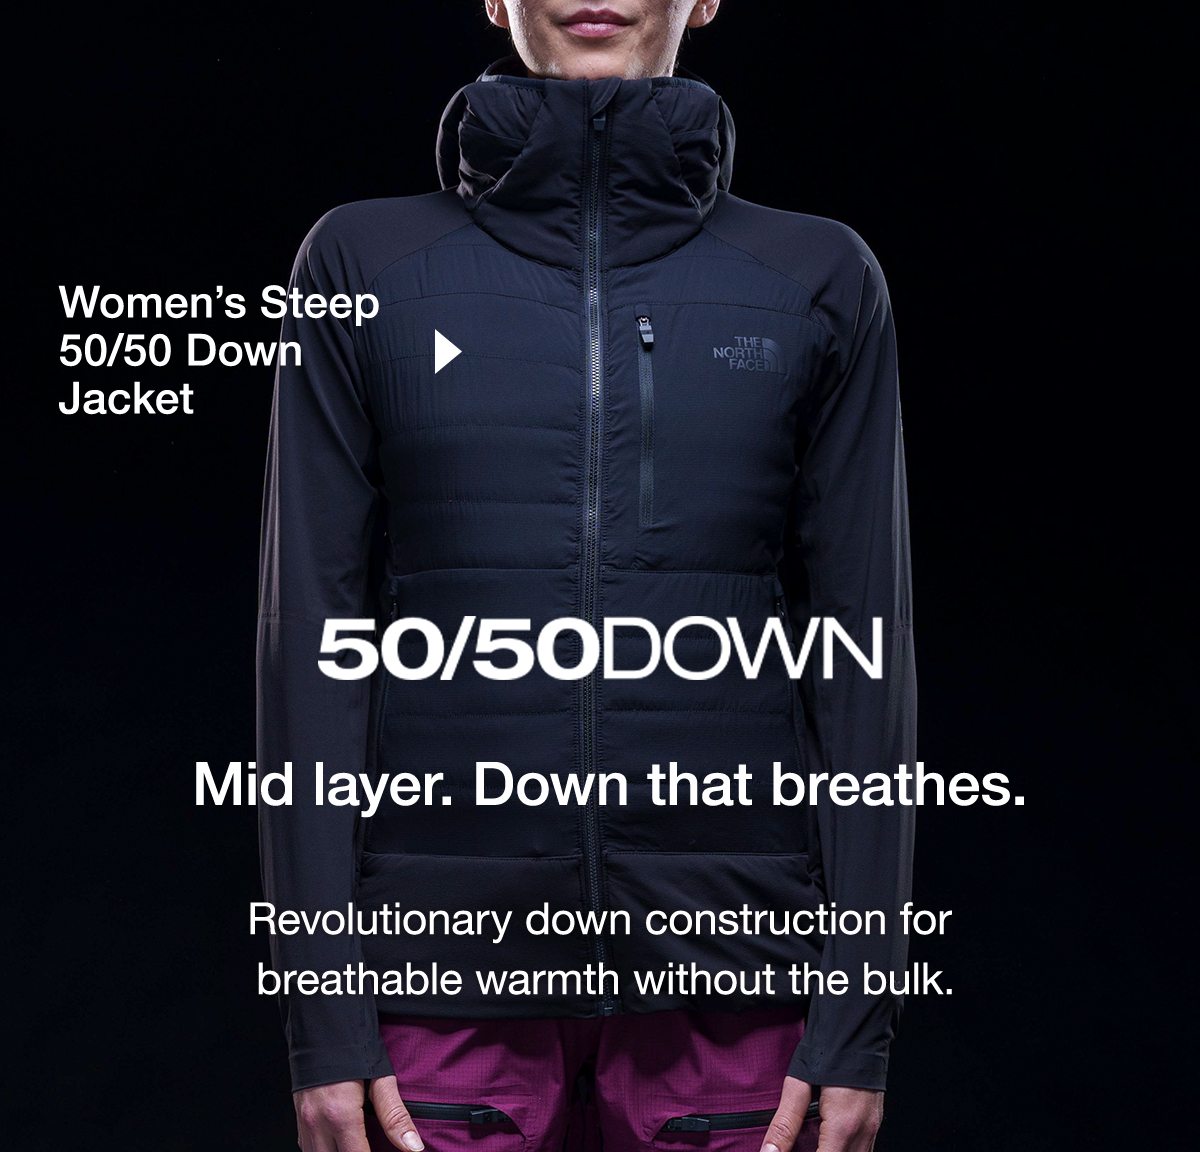 Women's Steep 50/50 Down Jacket